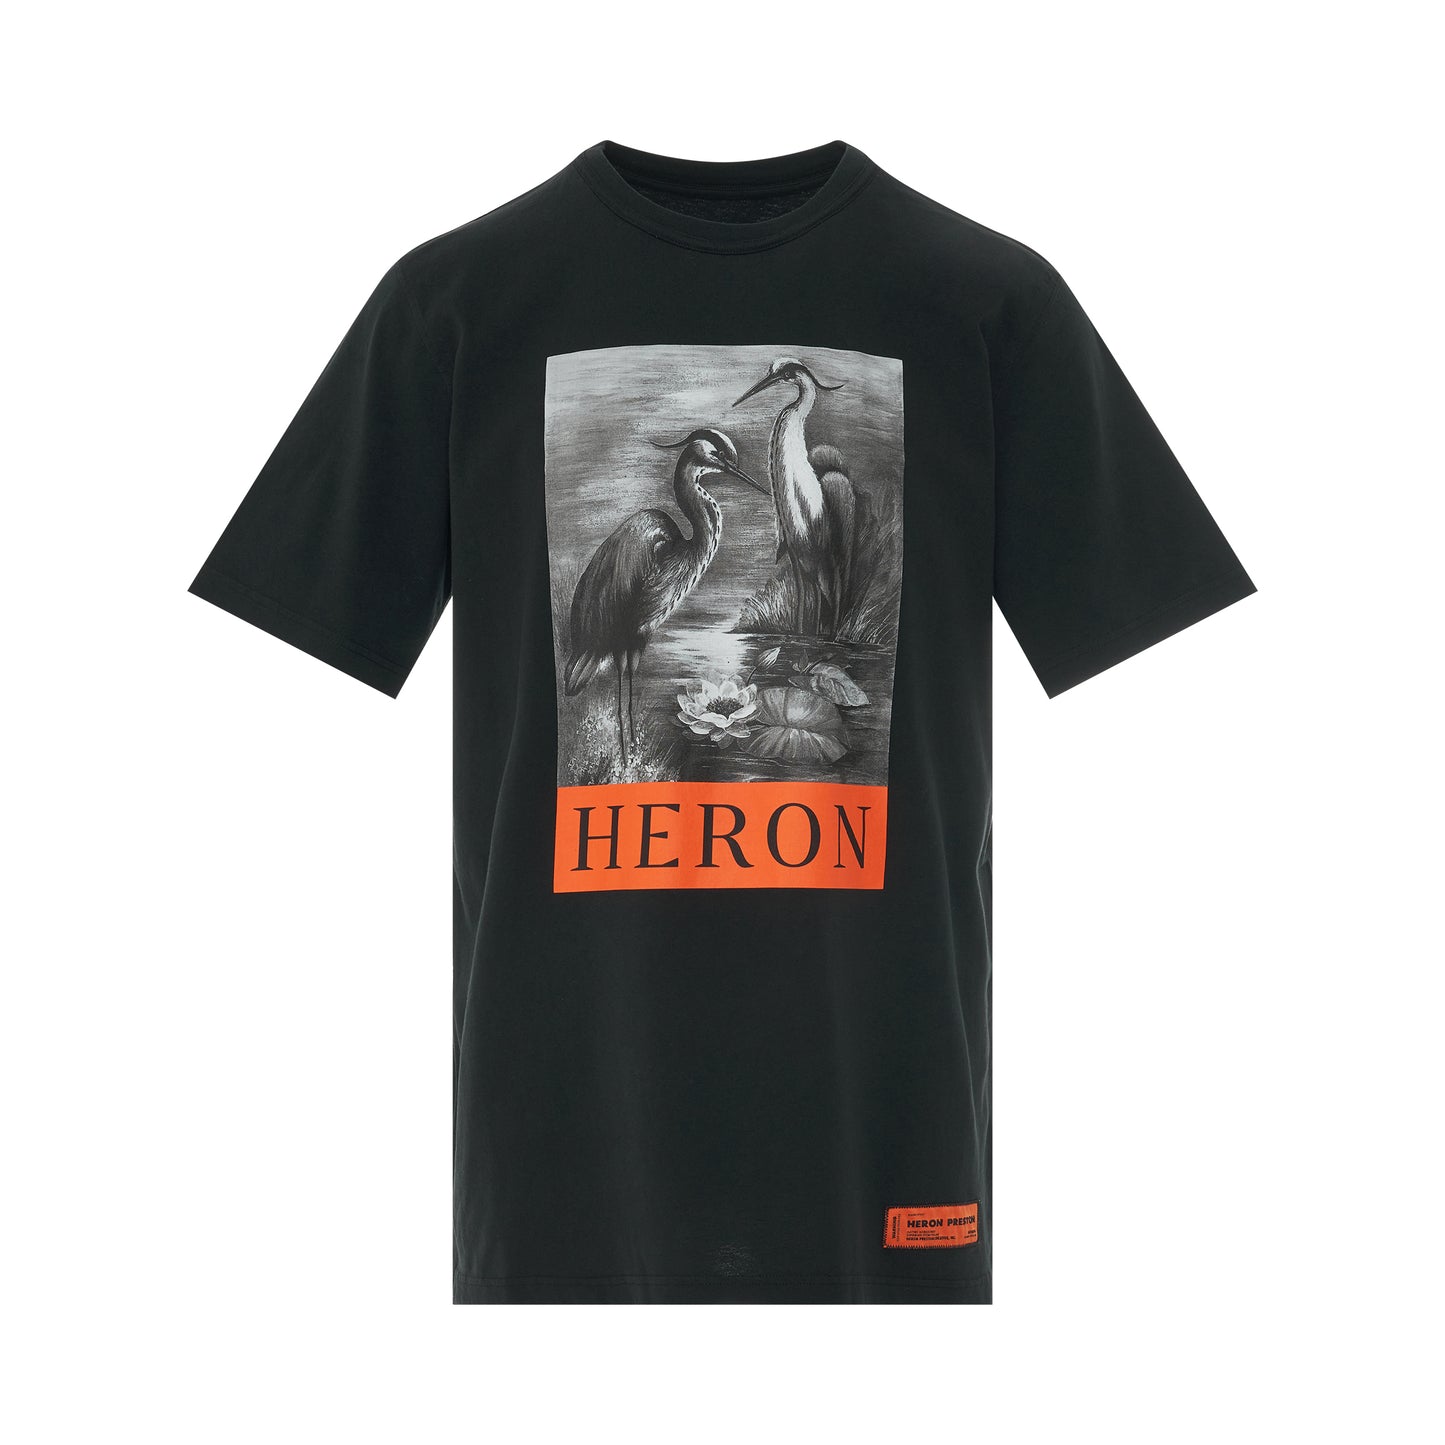 Heron BW Oversized T-Shirt in Black